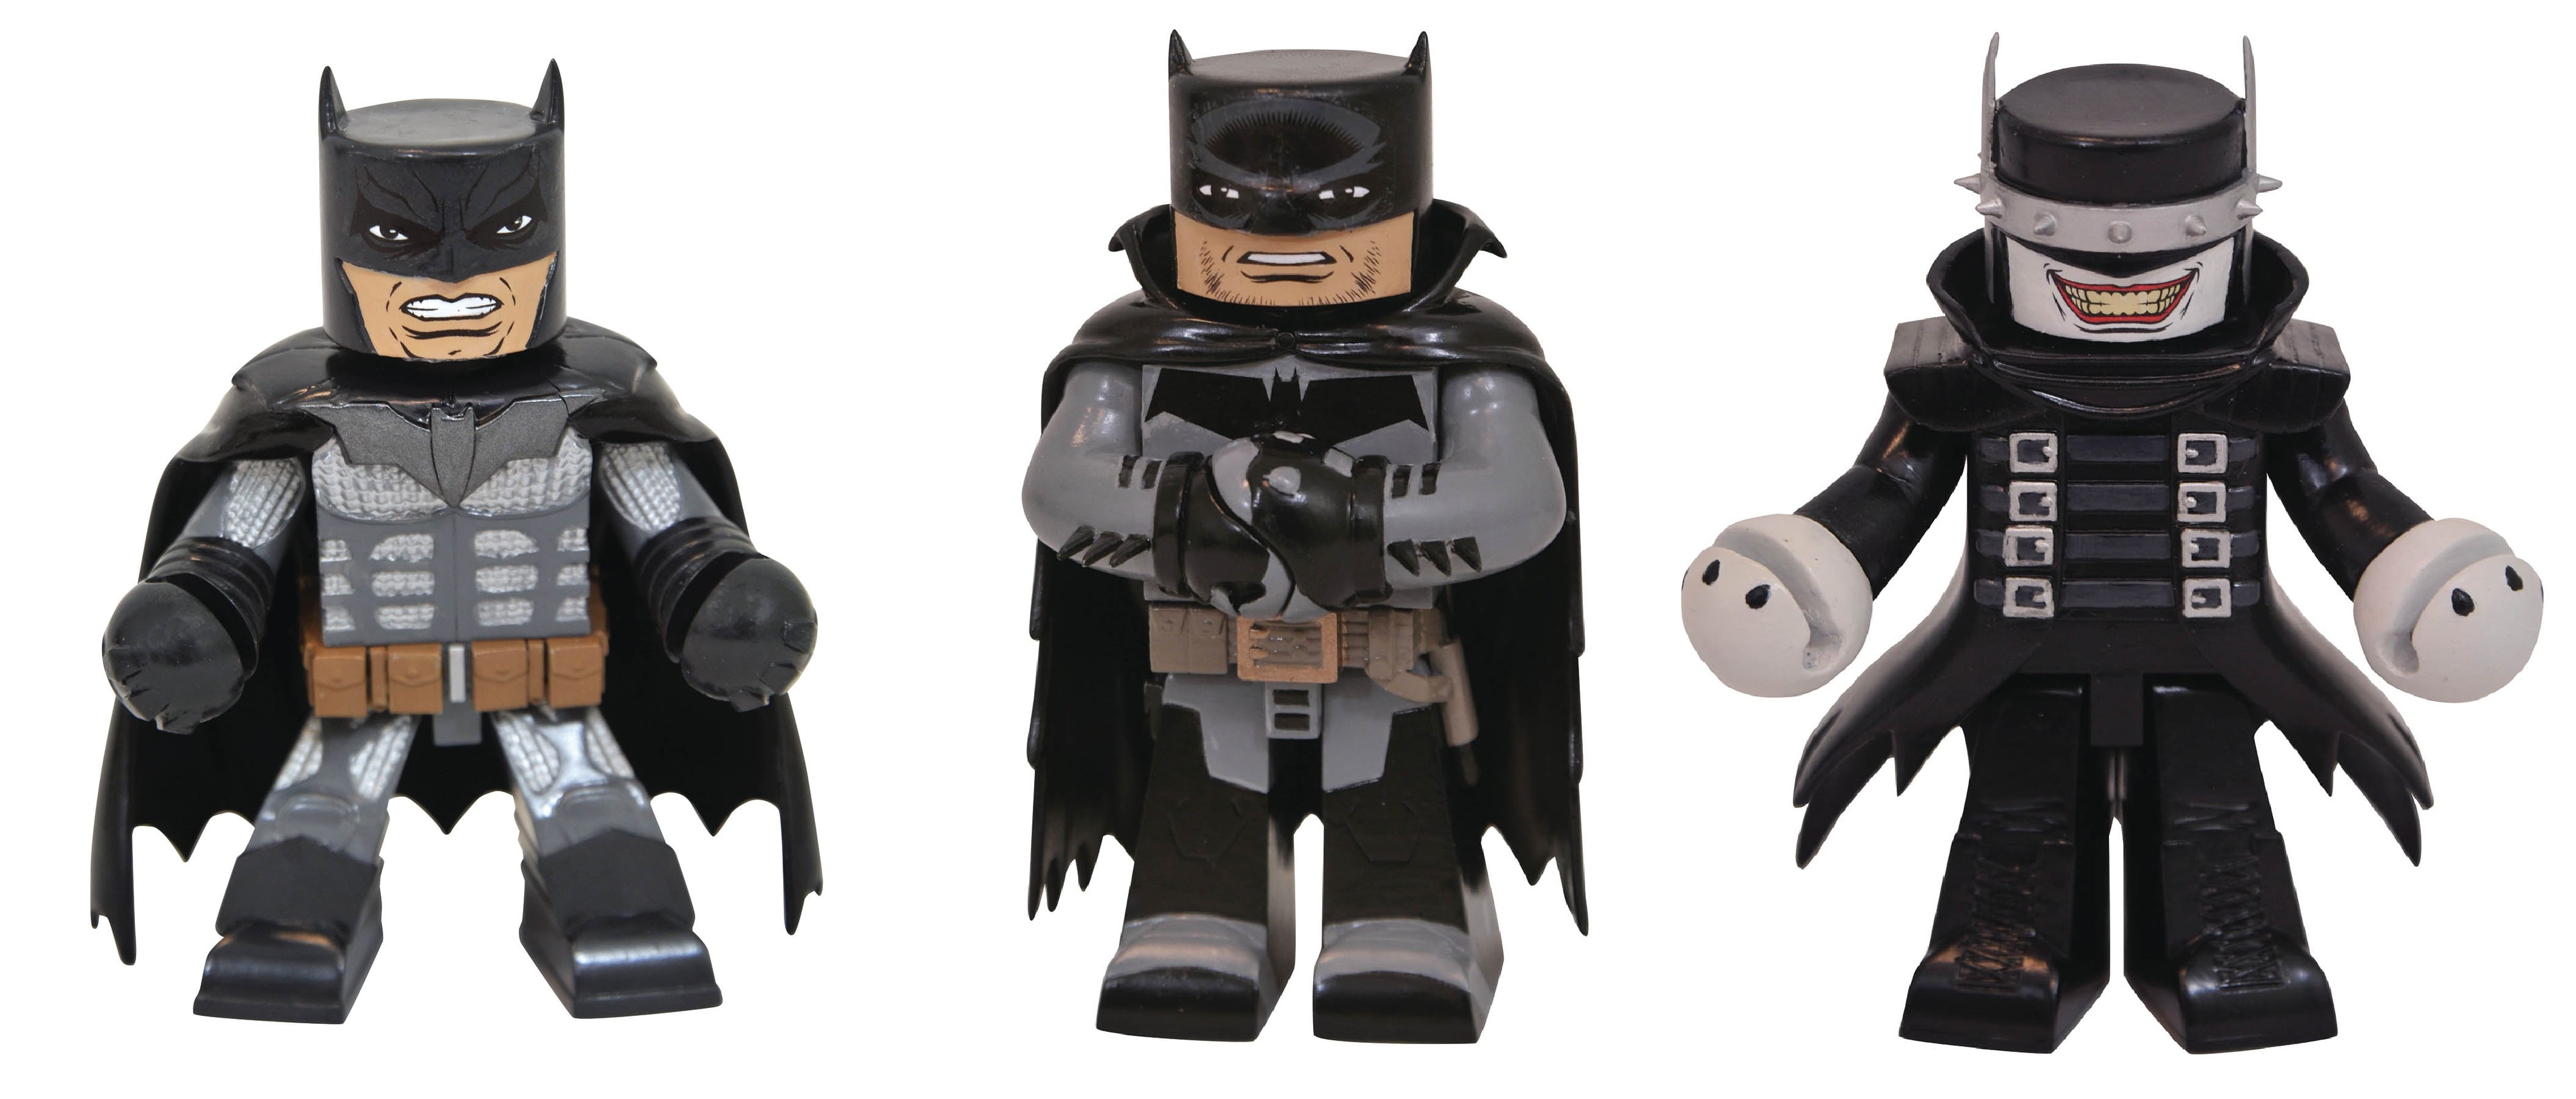 Diamond Select Toys Vinimates Batman Who Laughs Just Released 